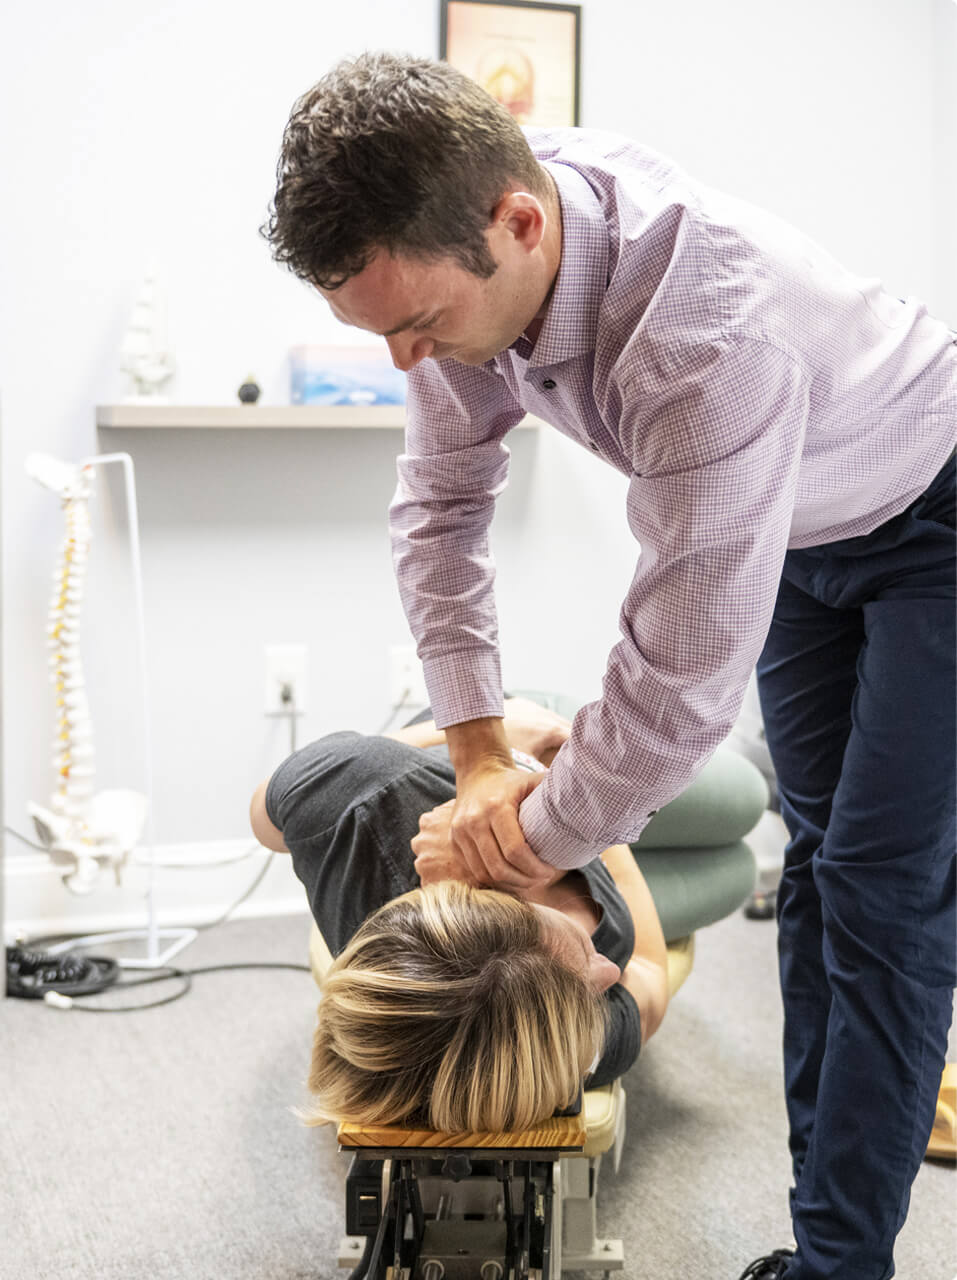 Chiropractor cracking patients back